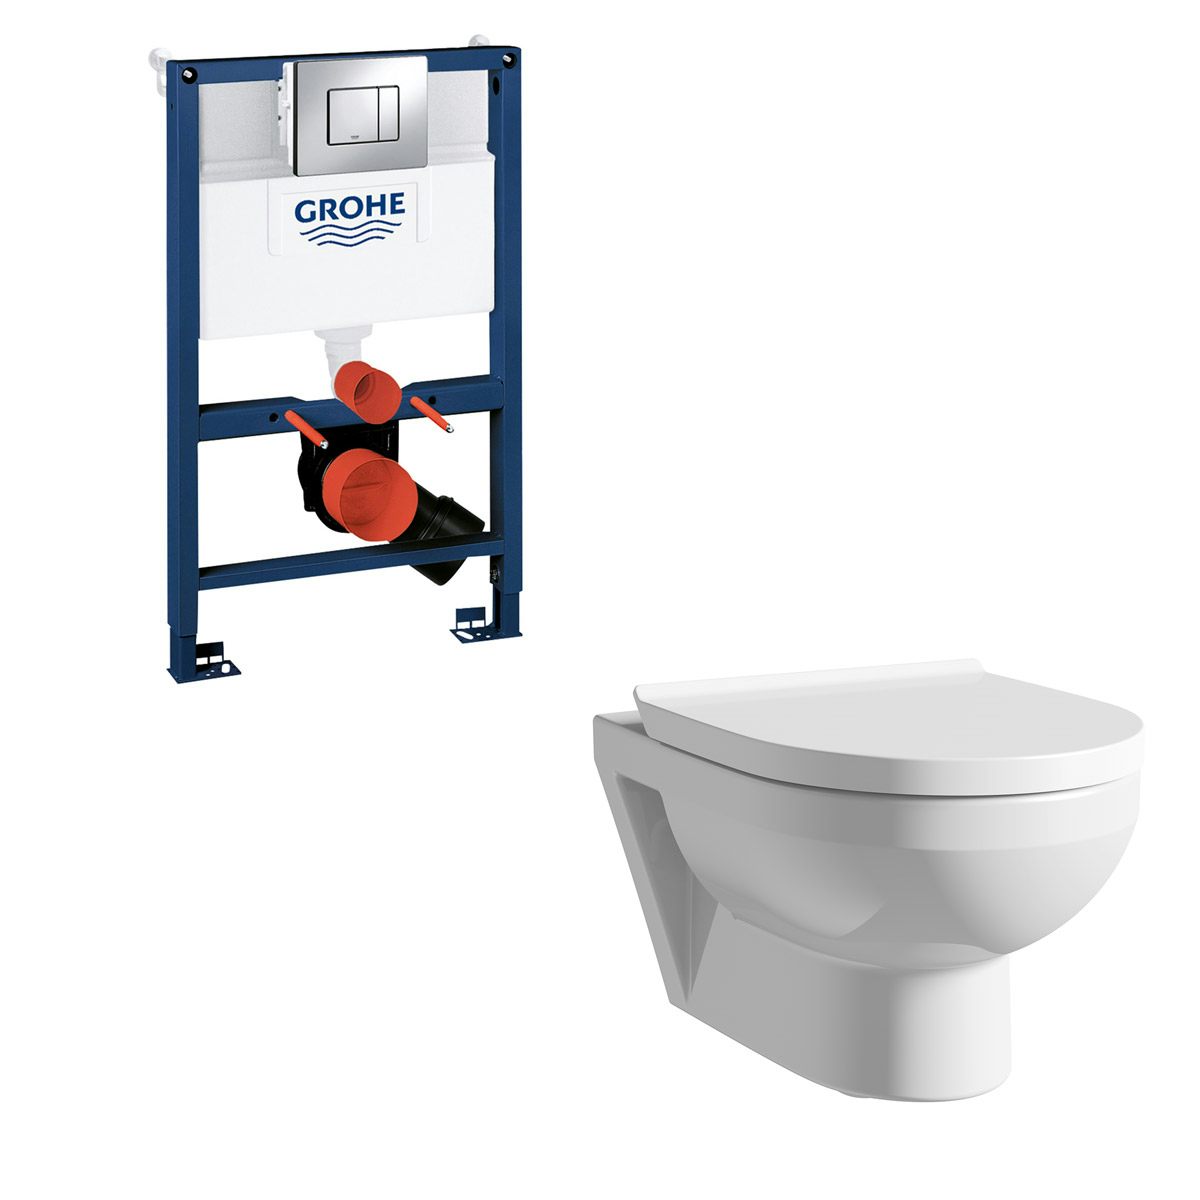 Ideal standard concealed cistern